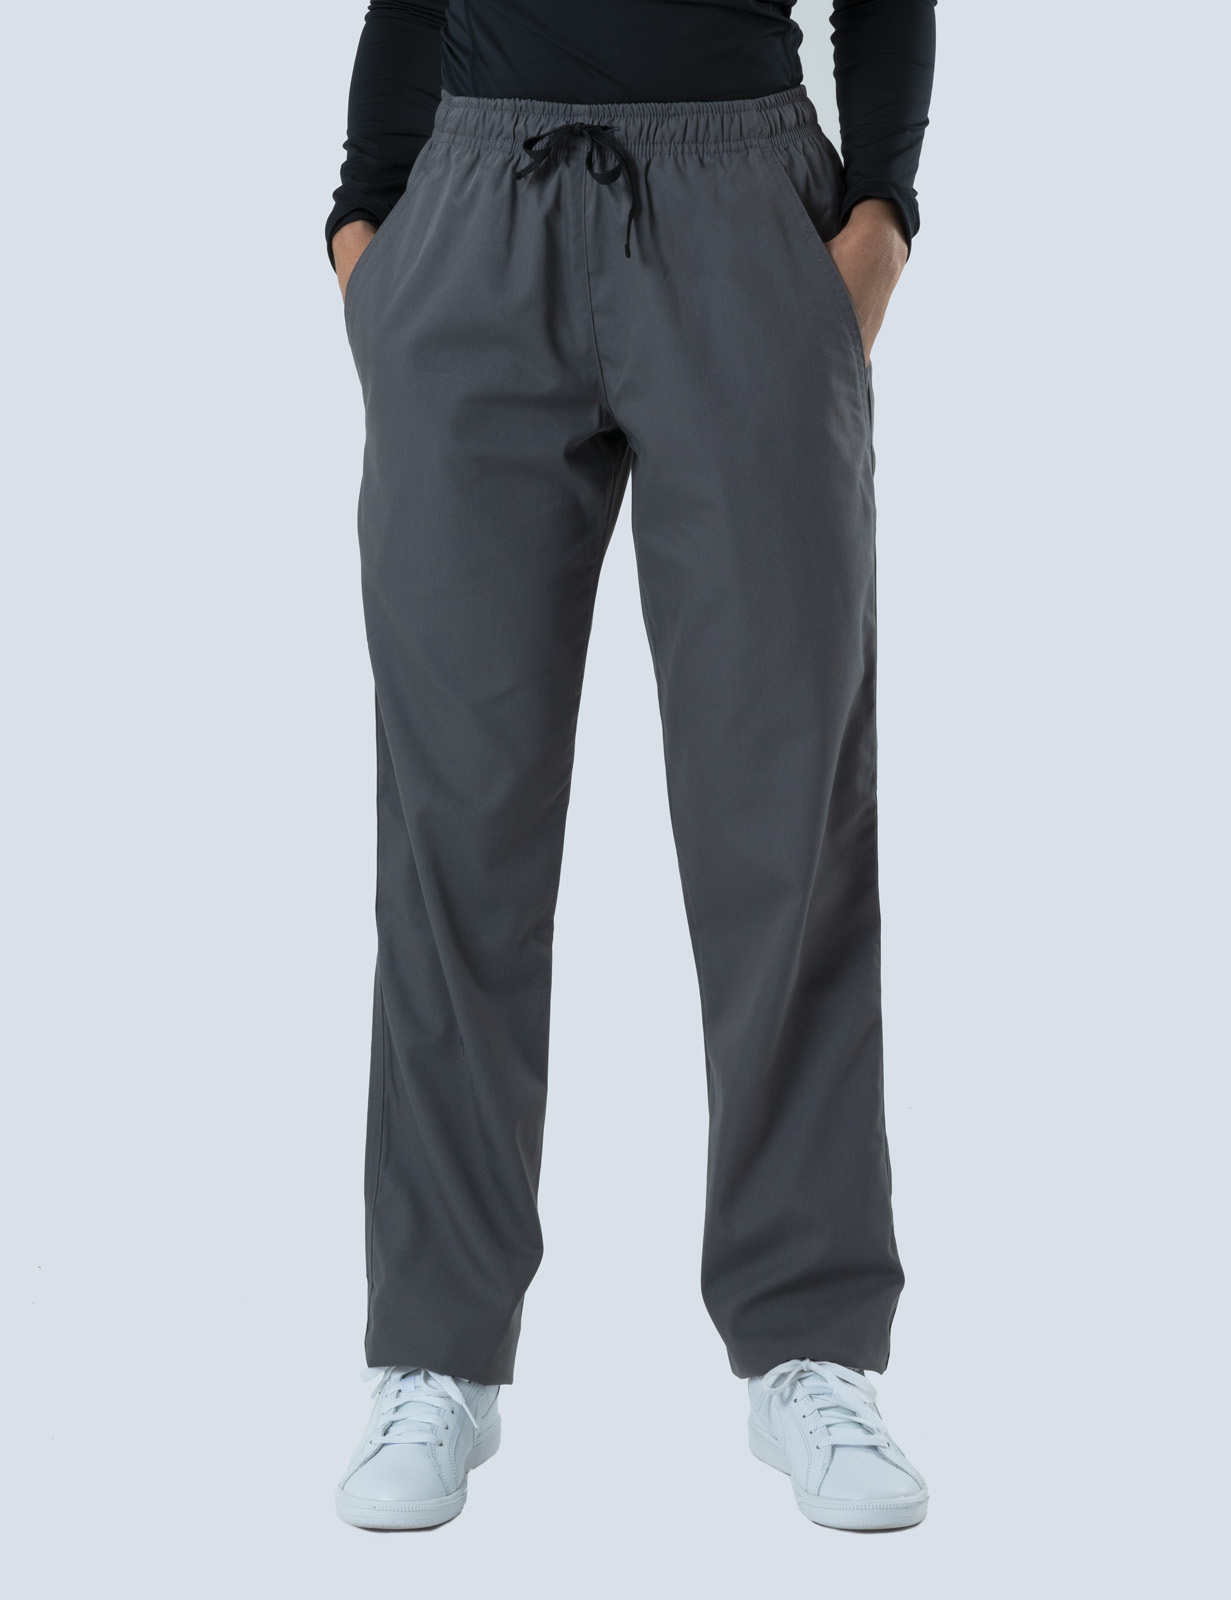 Regular Pants - Goulburn Valley Health-MI (pants only) (Steel Grey Regular Pants)